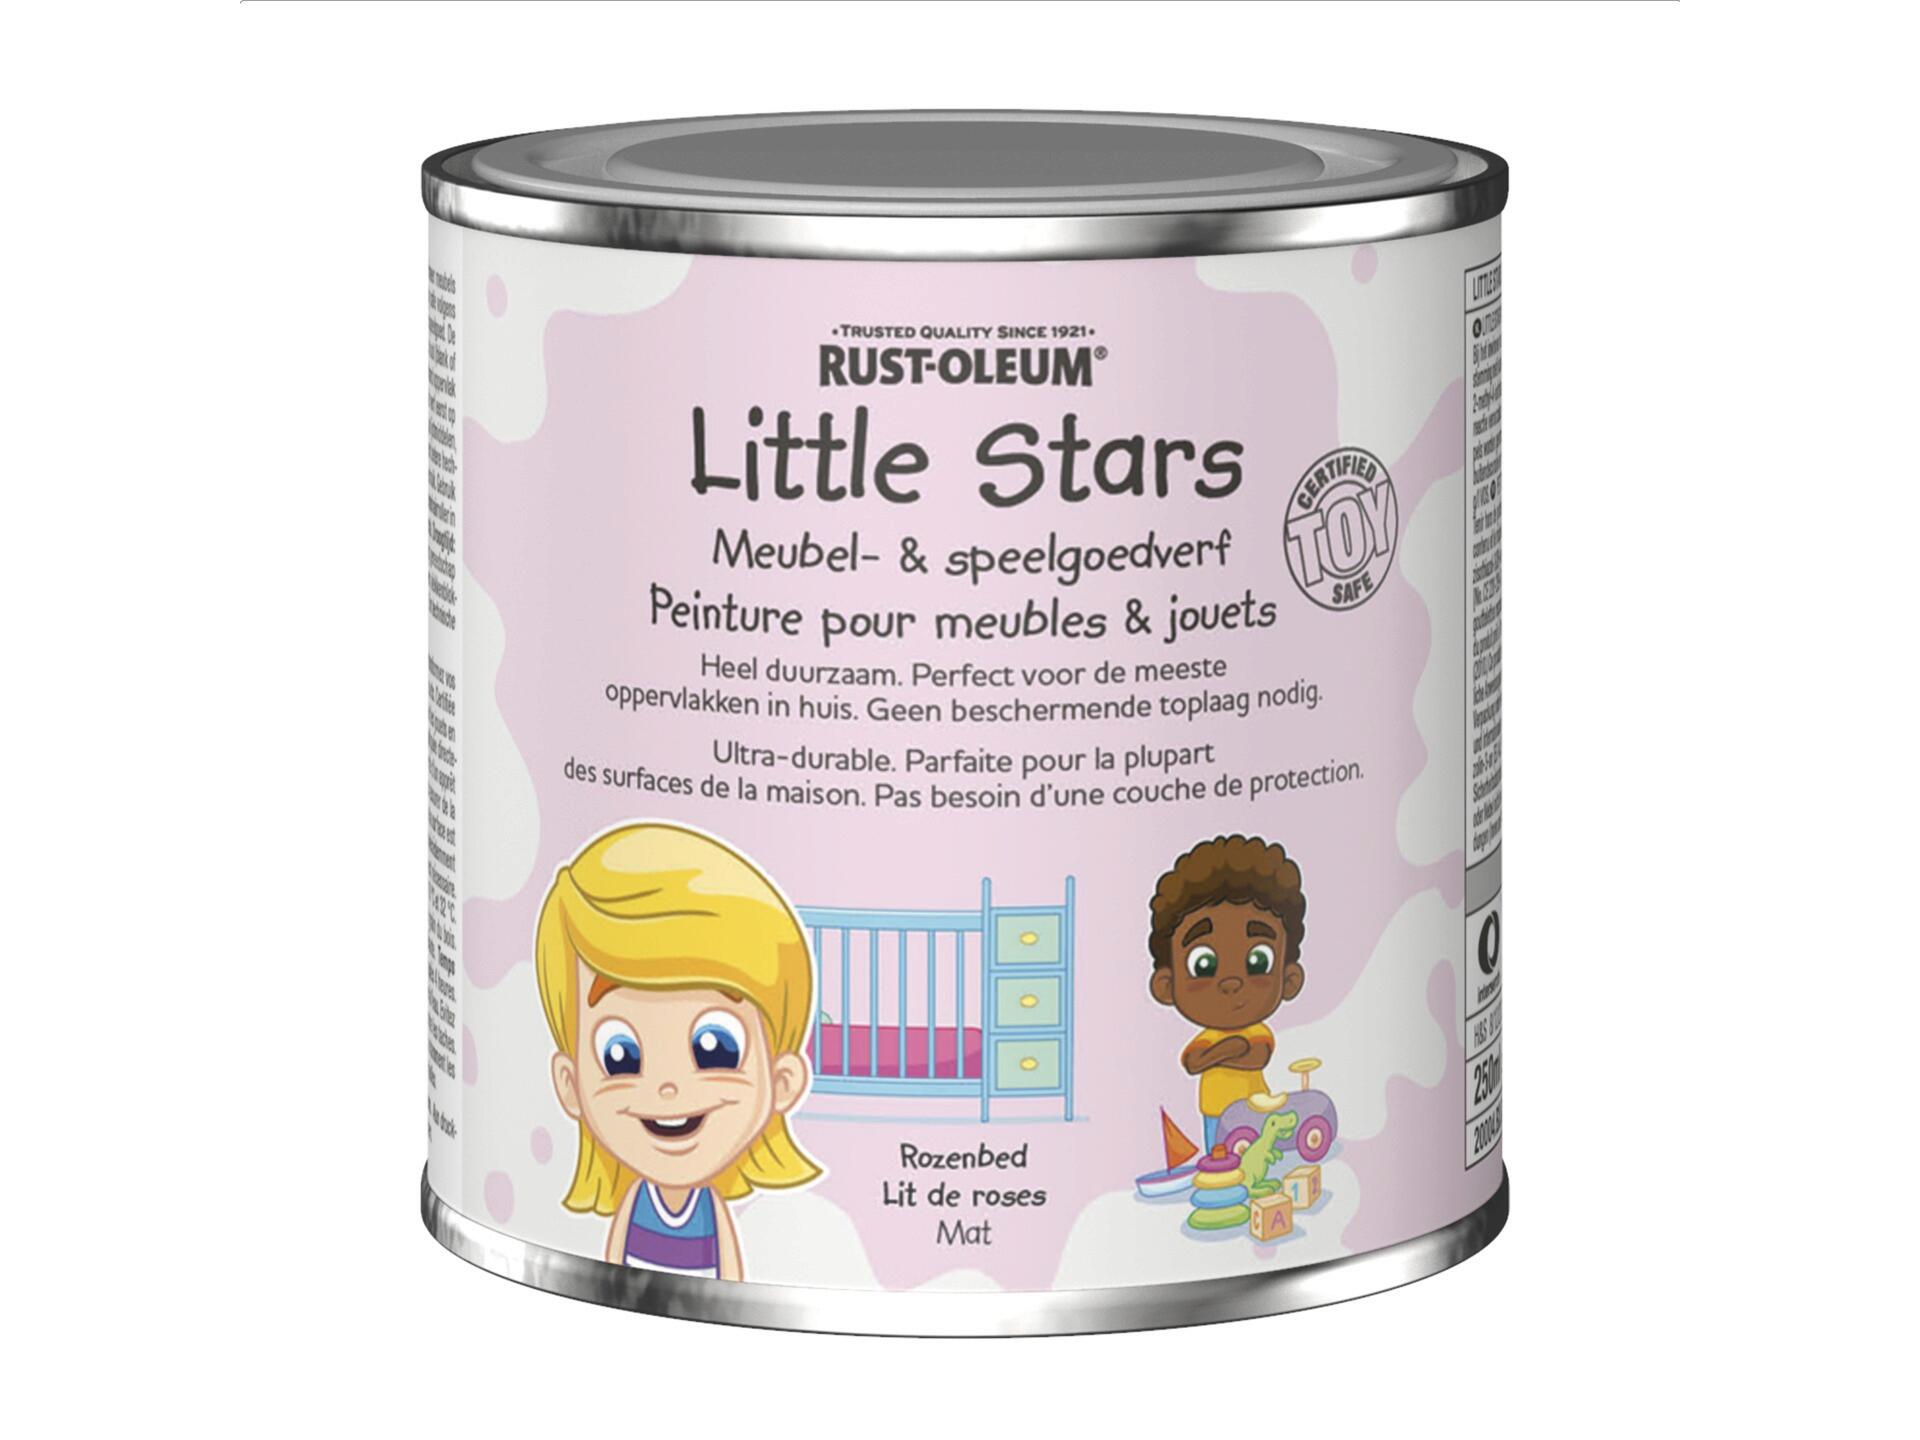 Rust-oleum Little Stars meubel- en speelgoedverf 250ml rozenbed